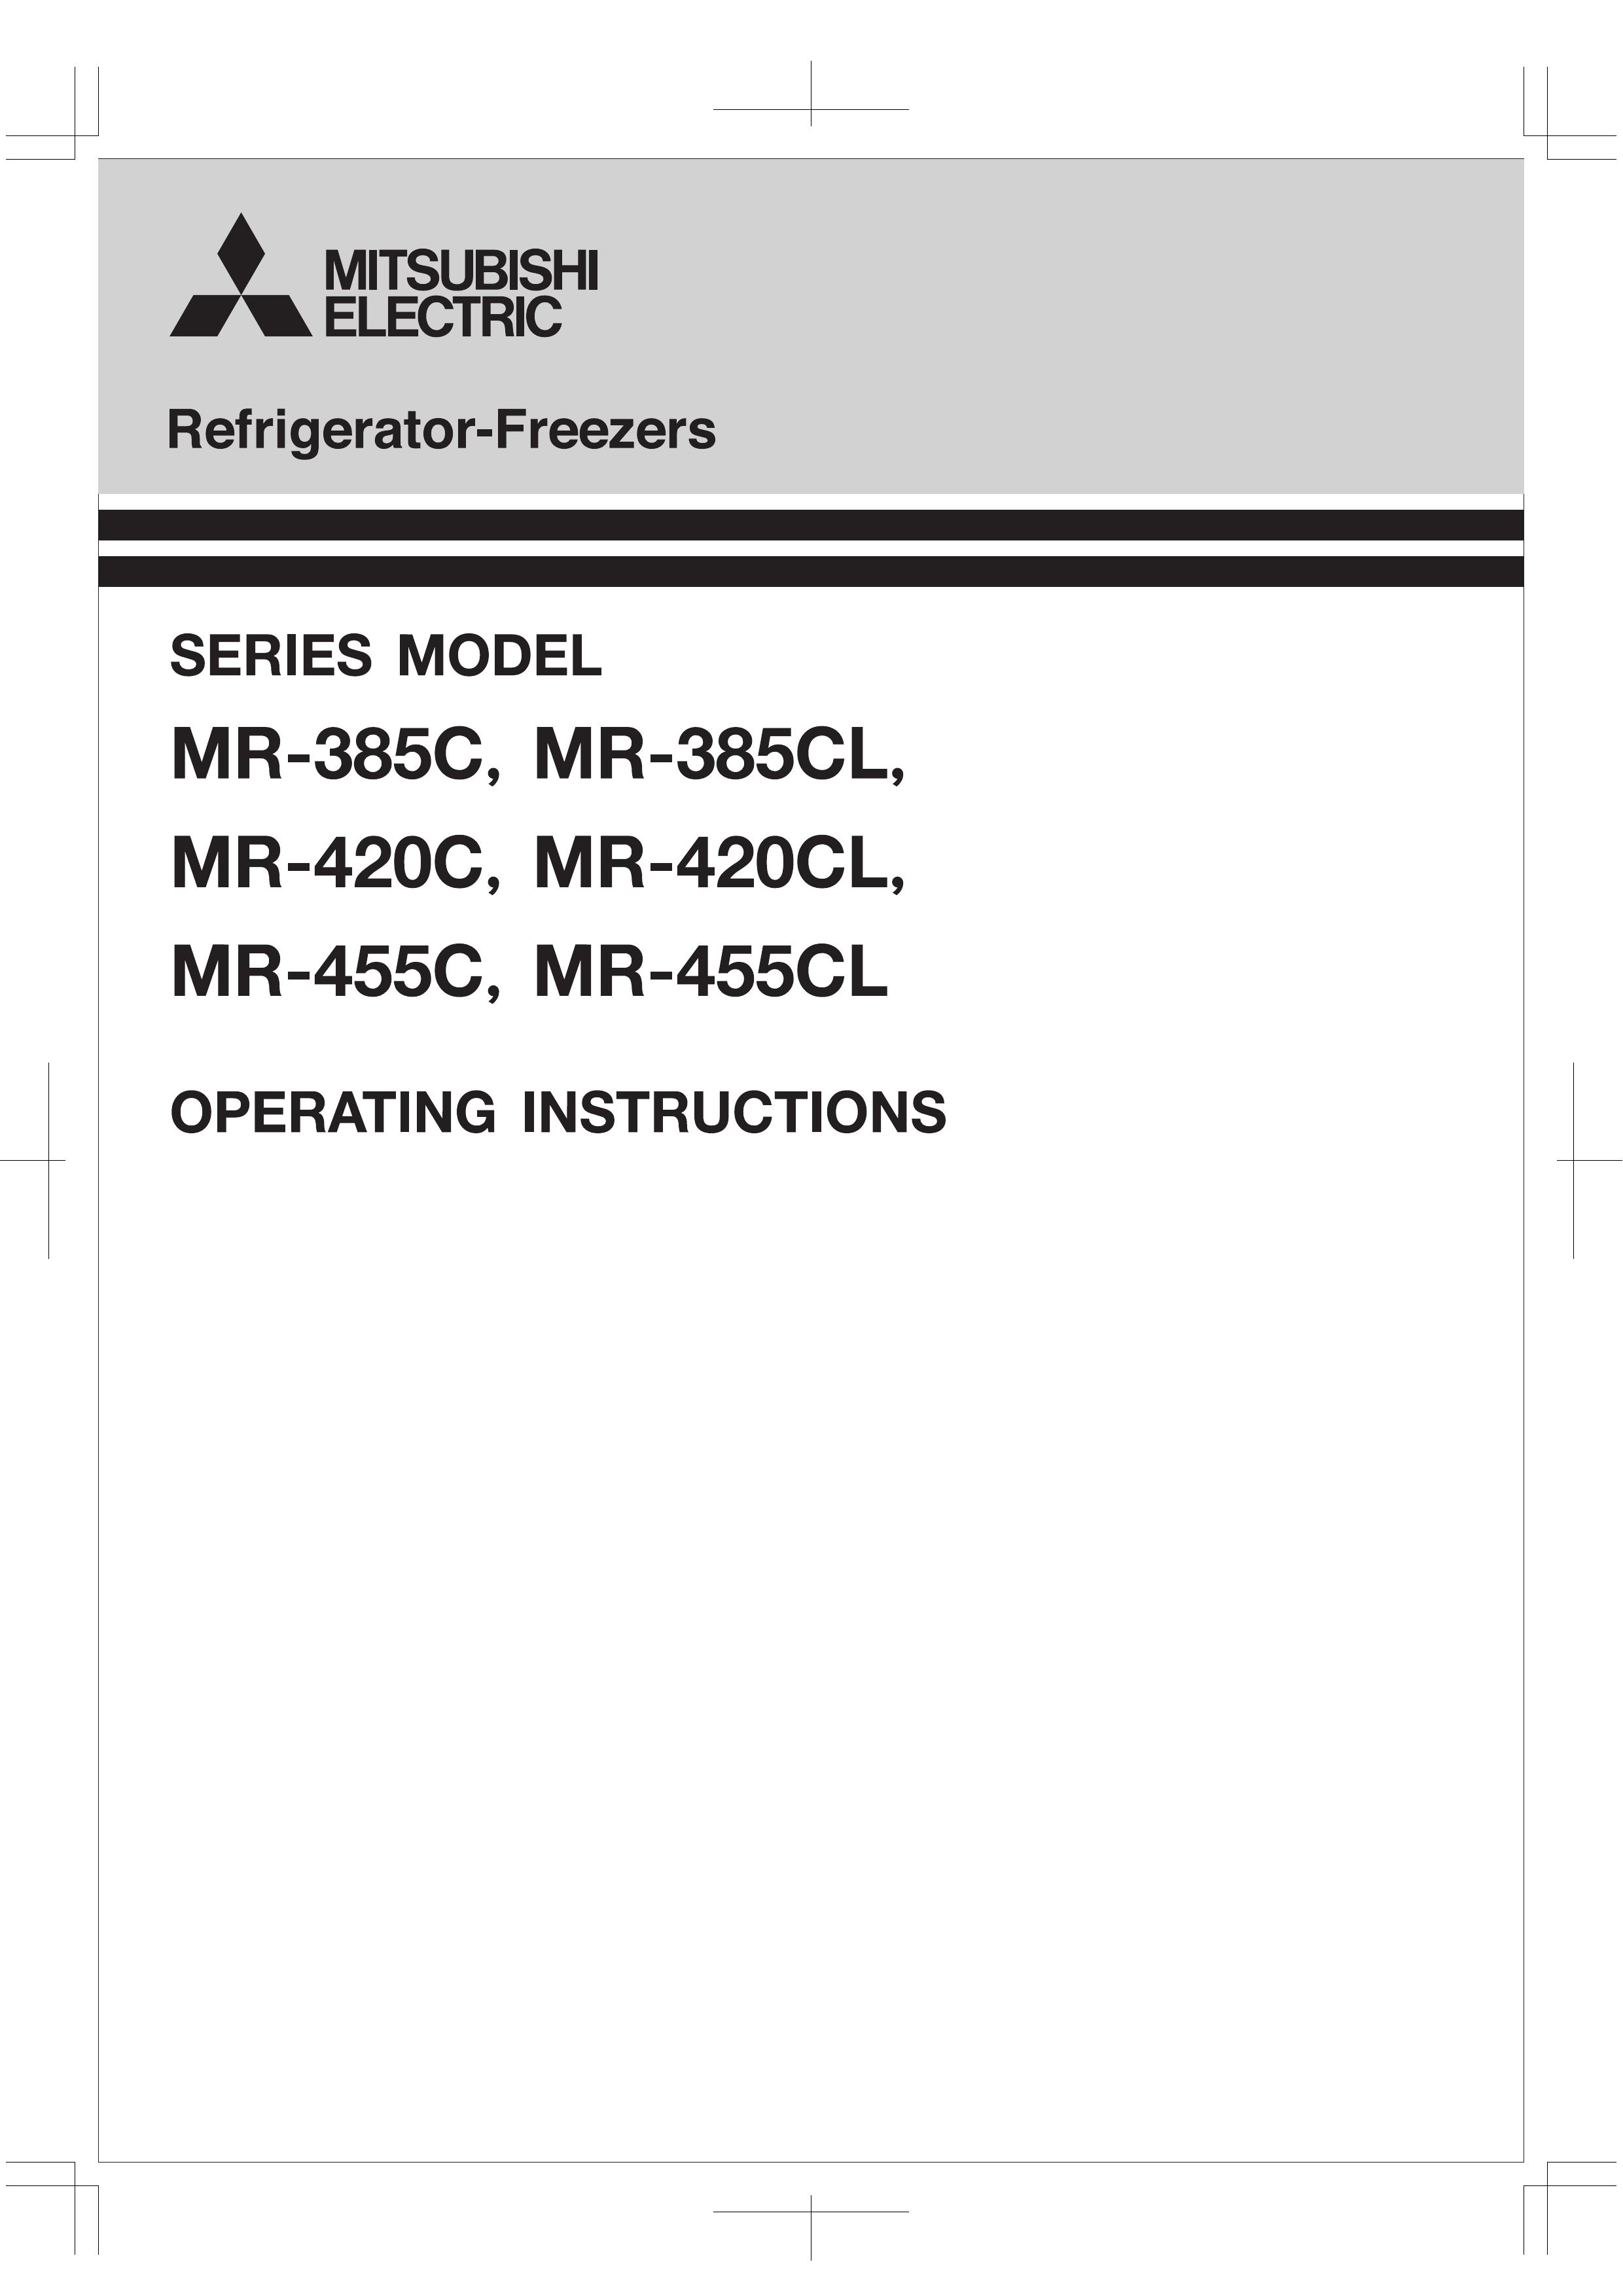 Mitsubishi Electronics MR-455C Refrigerator User Manual